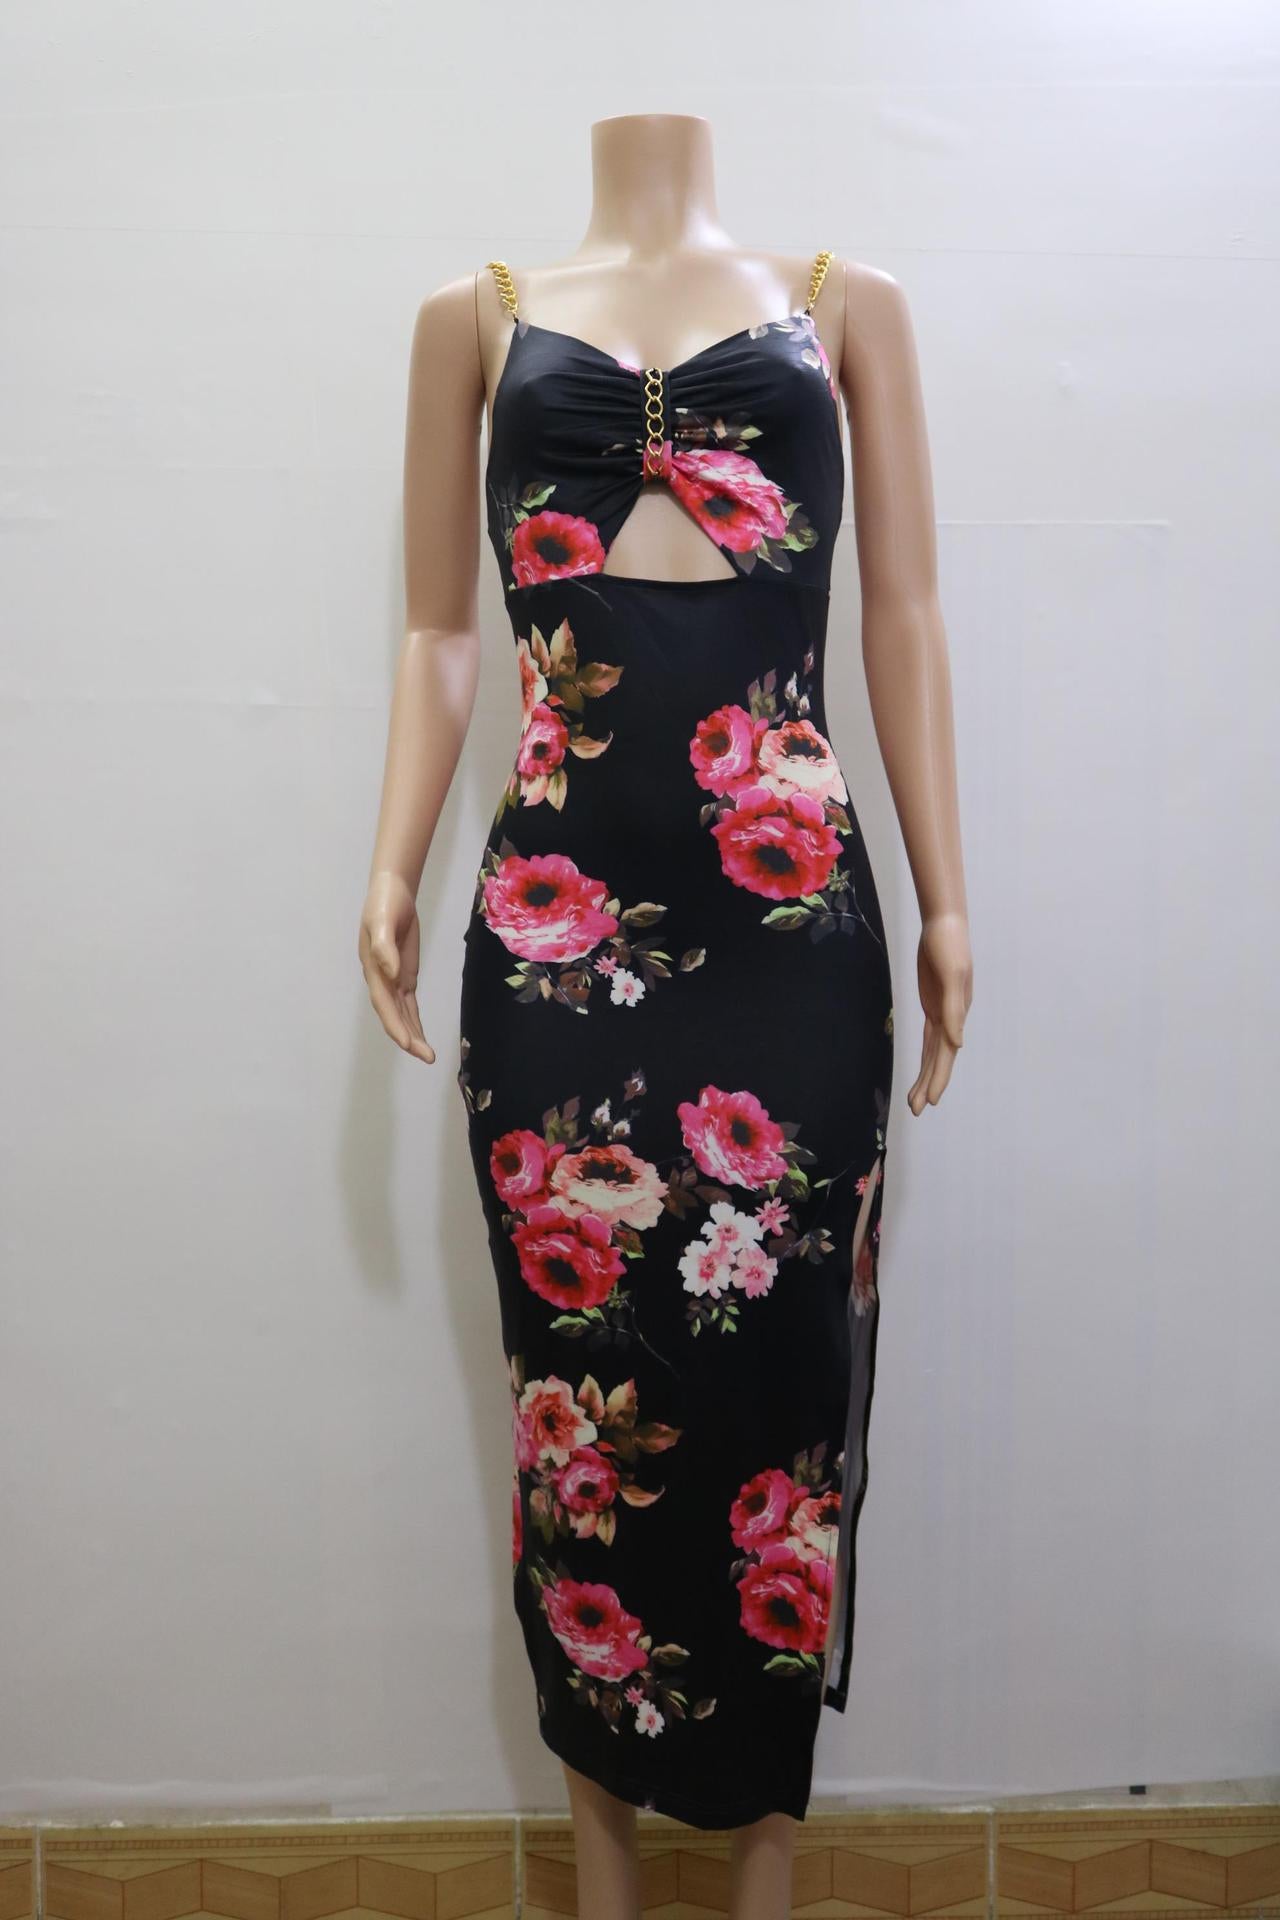 Summer Clothing New Women's Clothing Split Spaghetti-strap Floral Print Dress